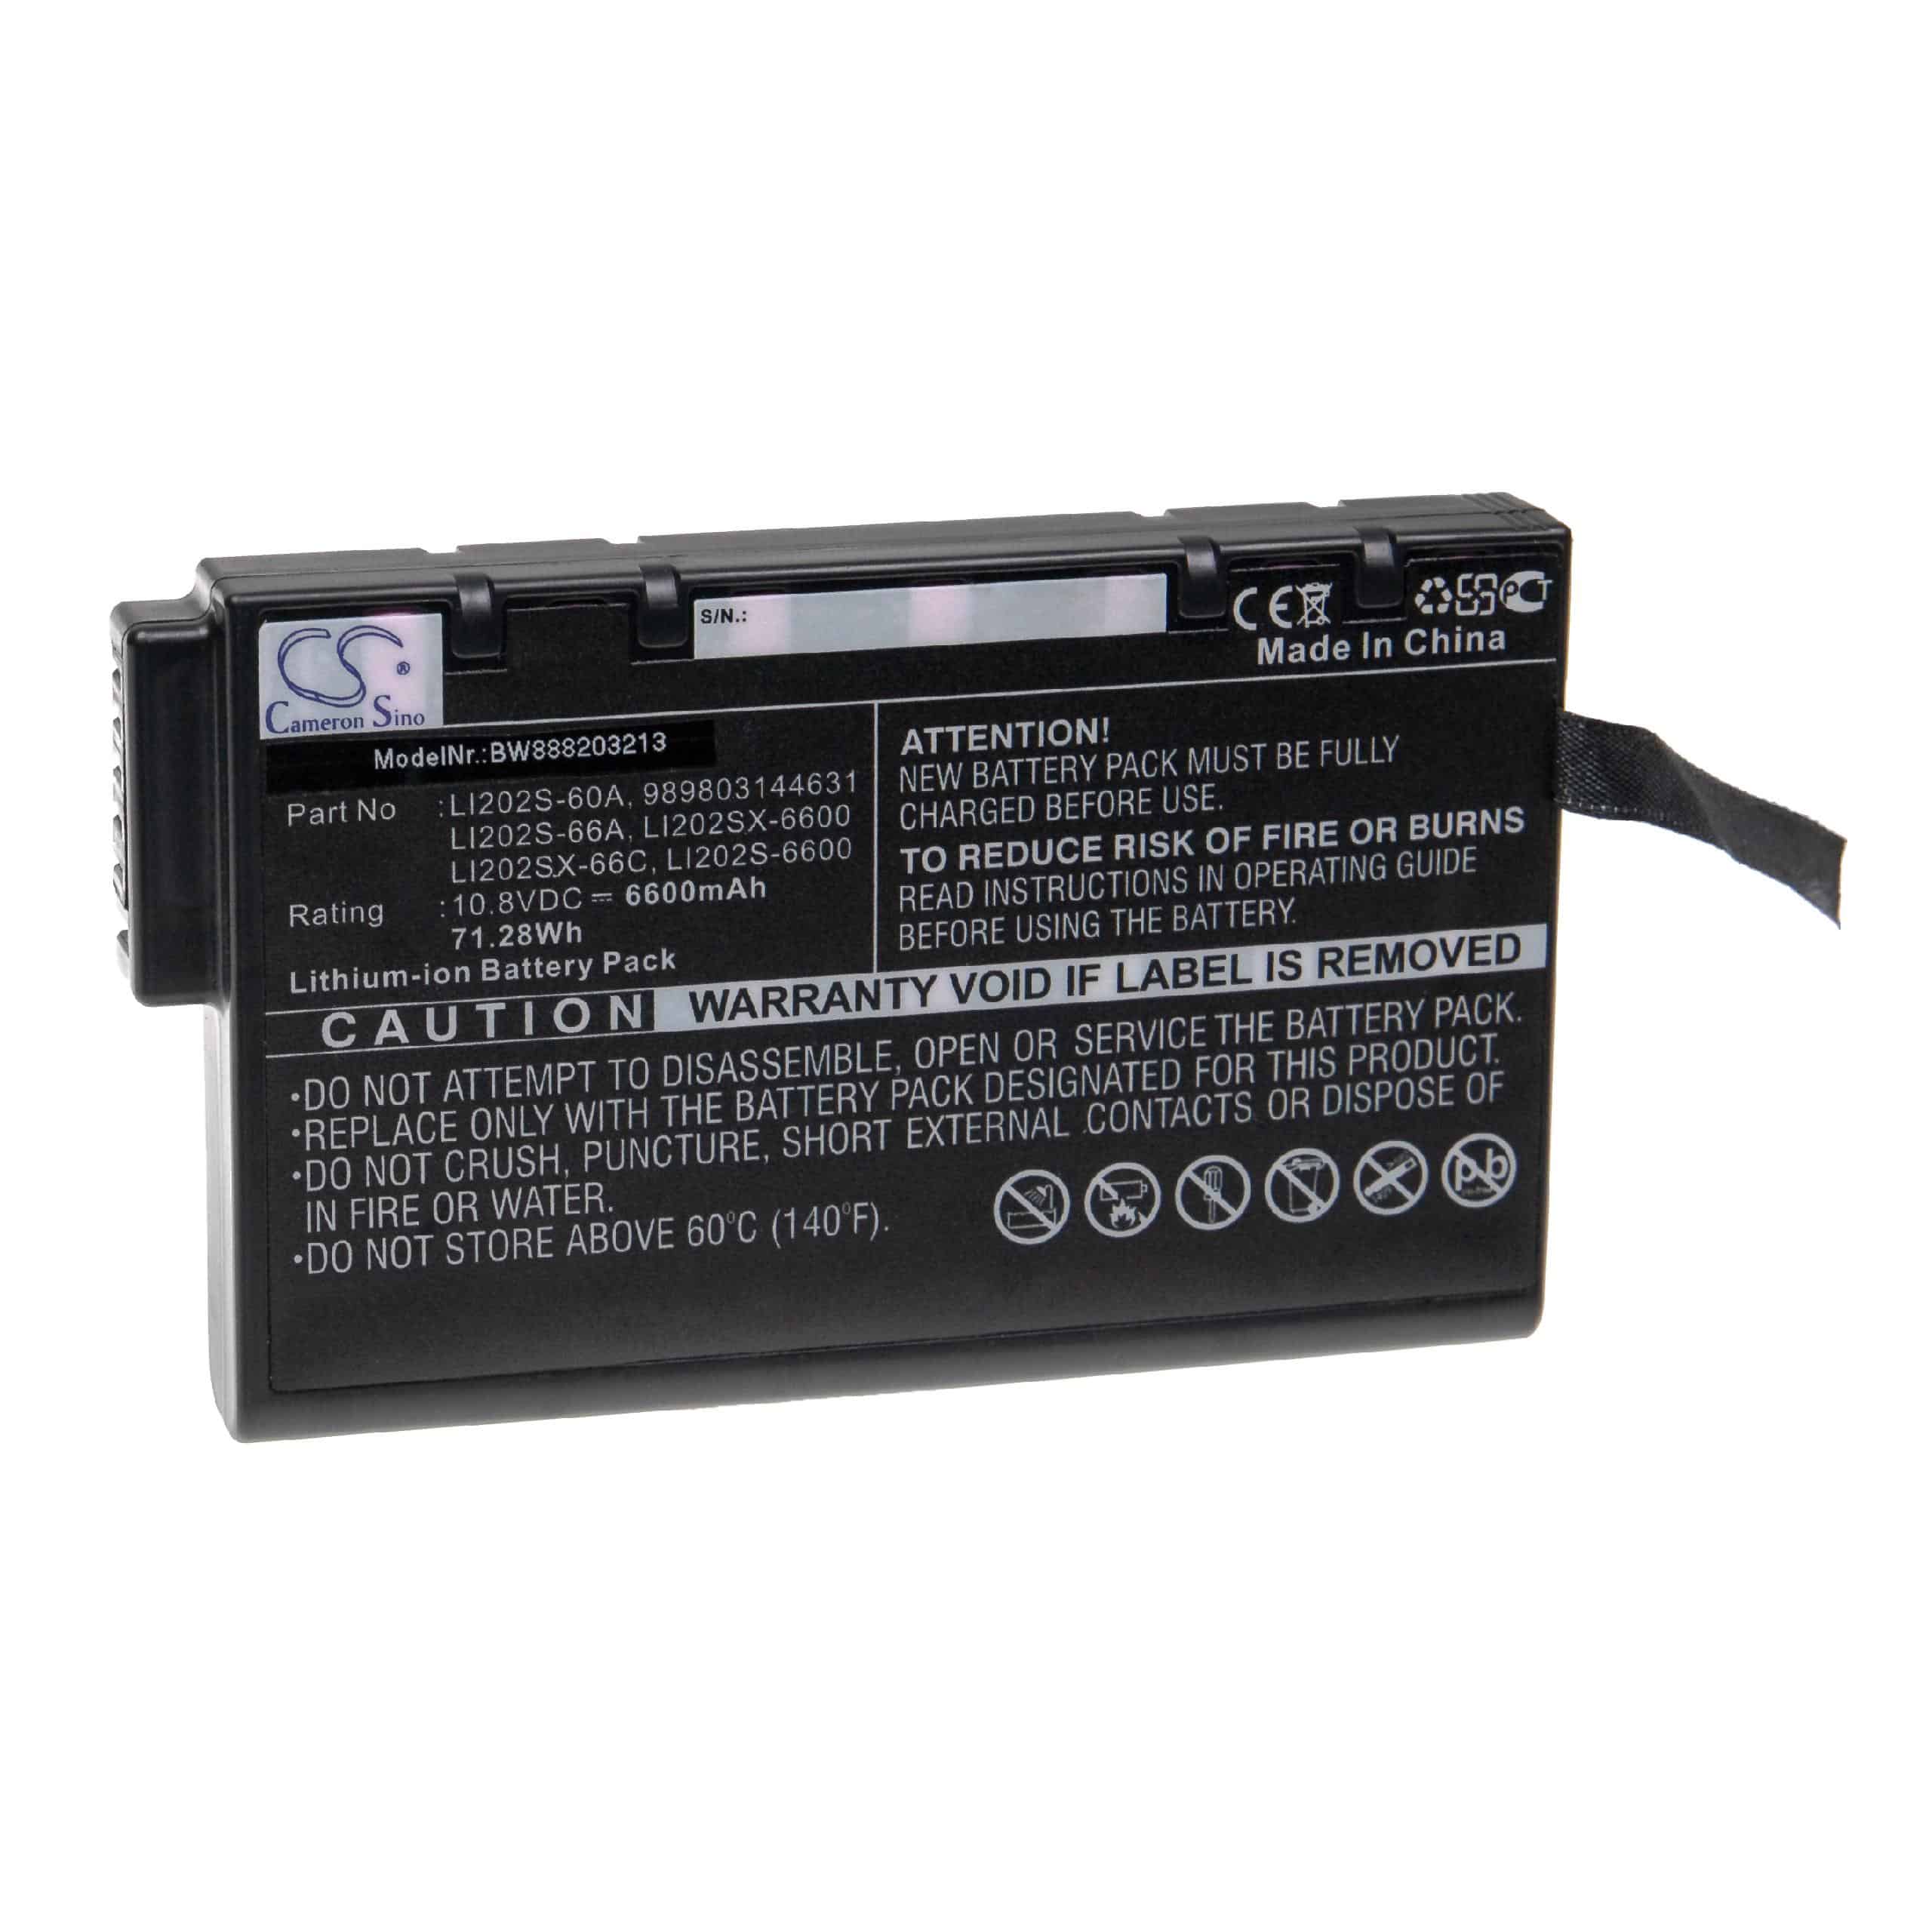 Batterie remplace AeroTrak Li202SX, Li202SX-6600, 700028 pour outil de mesure - 6600mAh 10,8V Li-ion